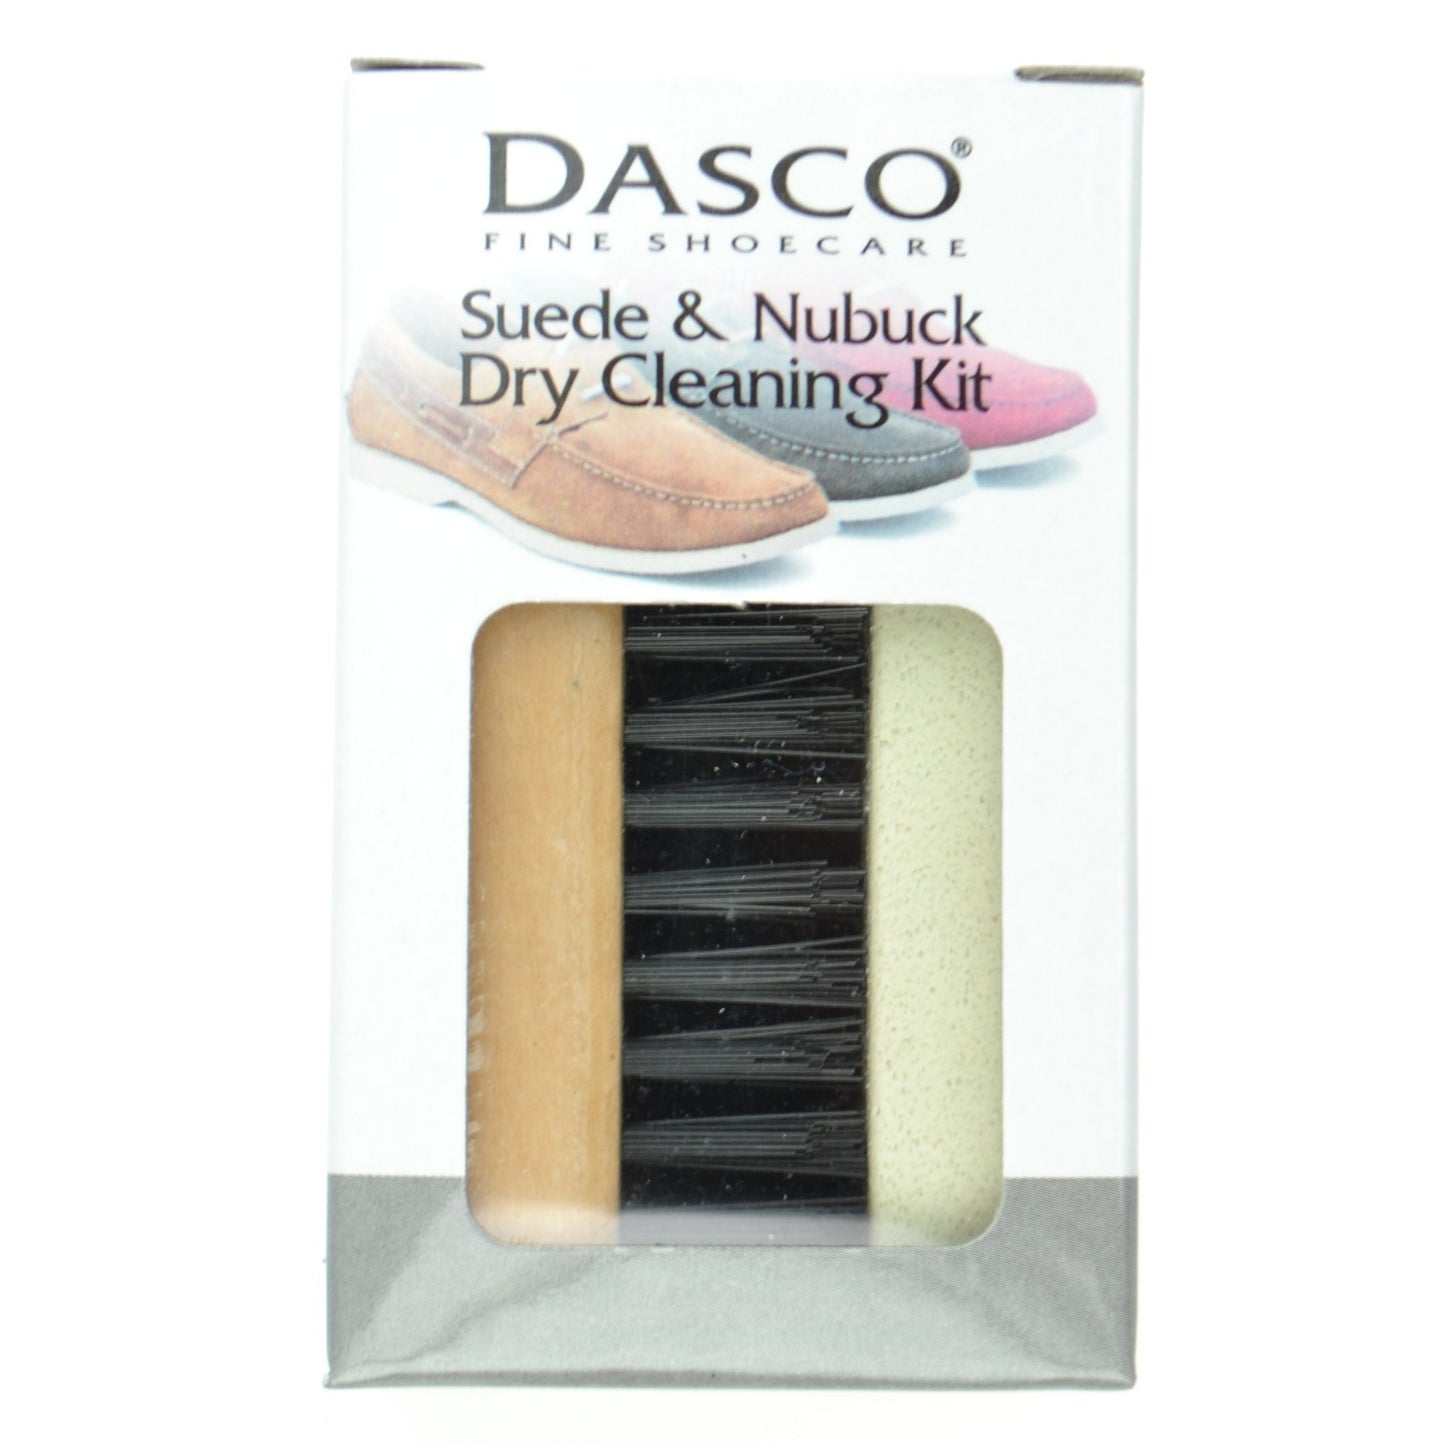 Dasco Suede & Nubuck Dry Cleaning Kit